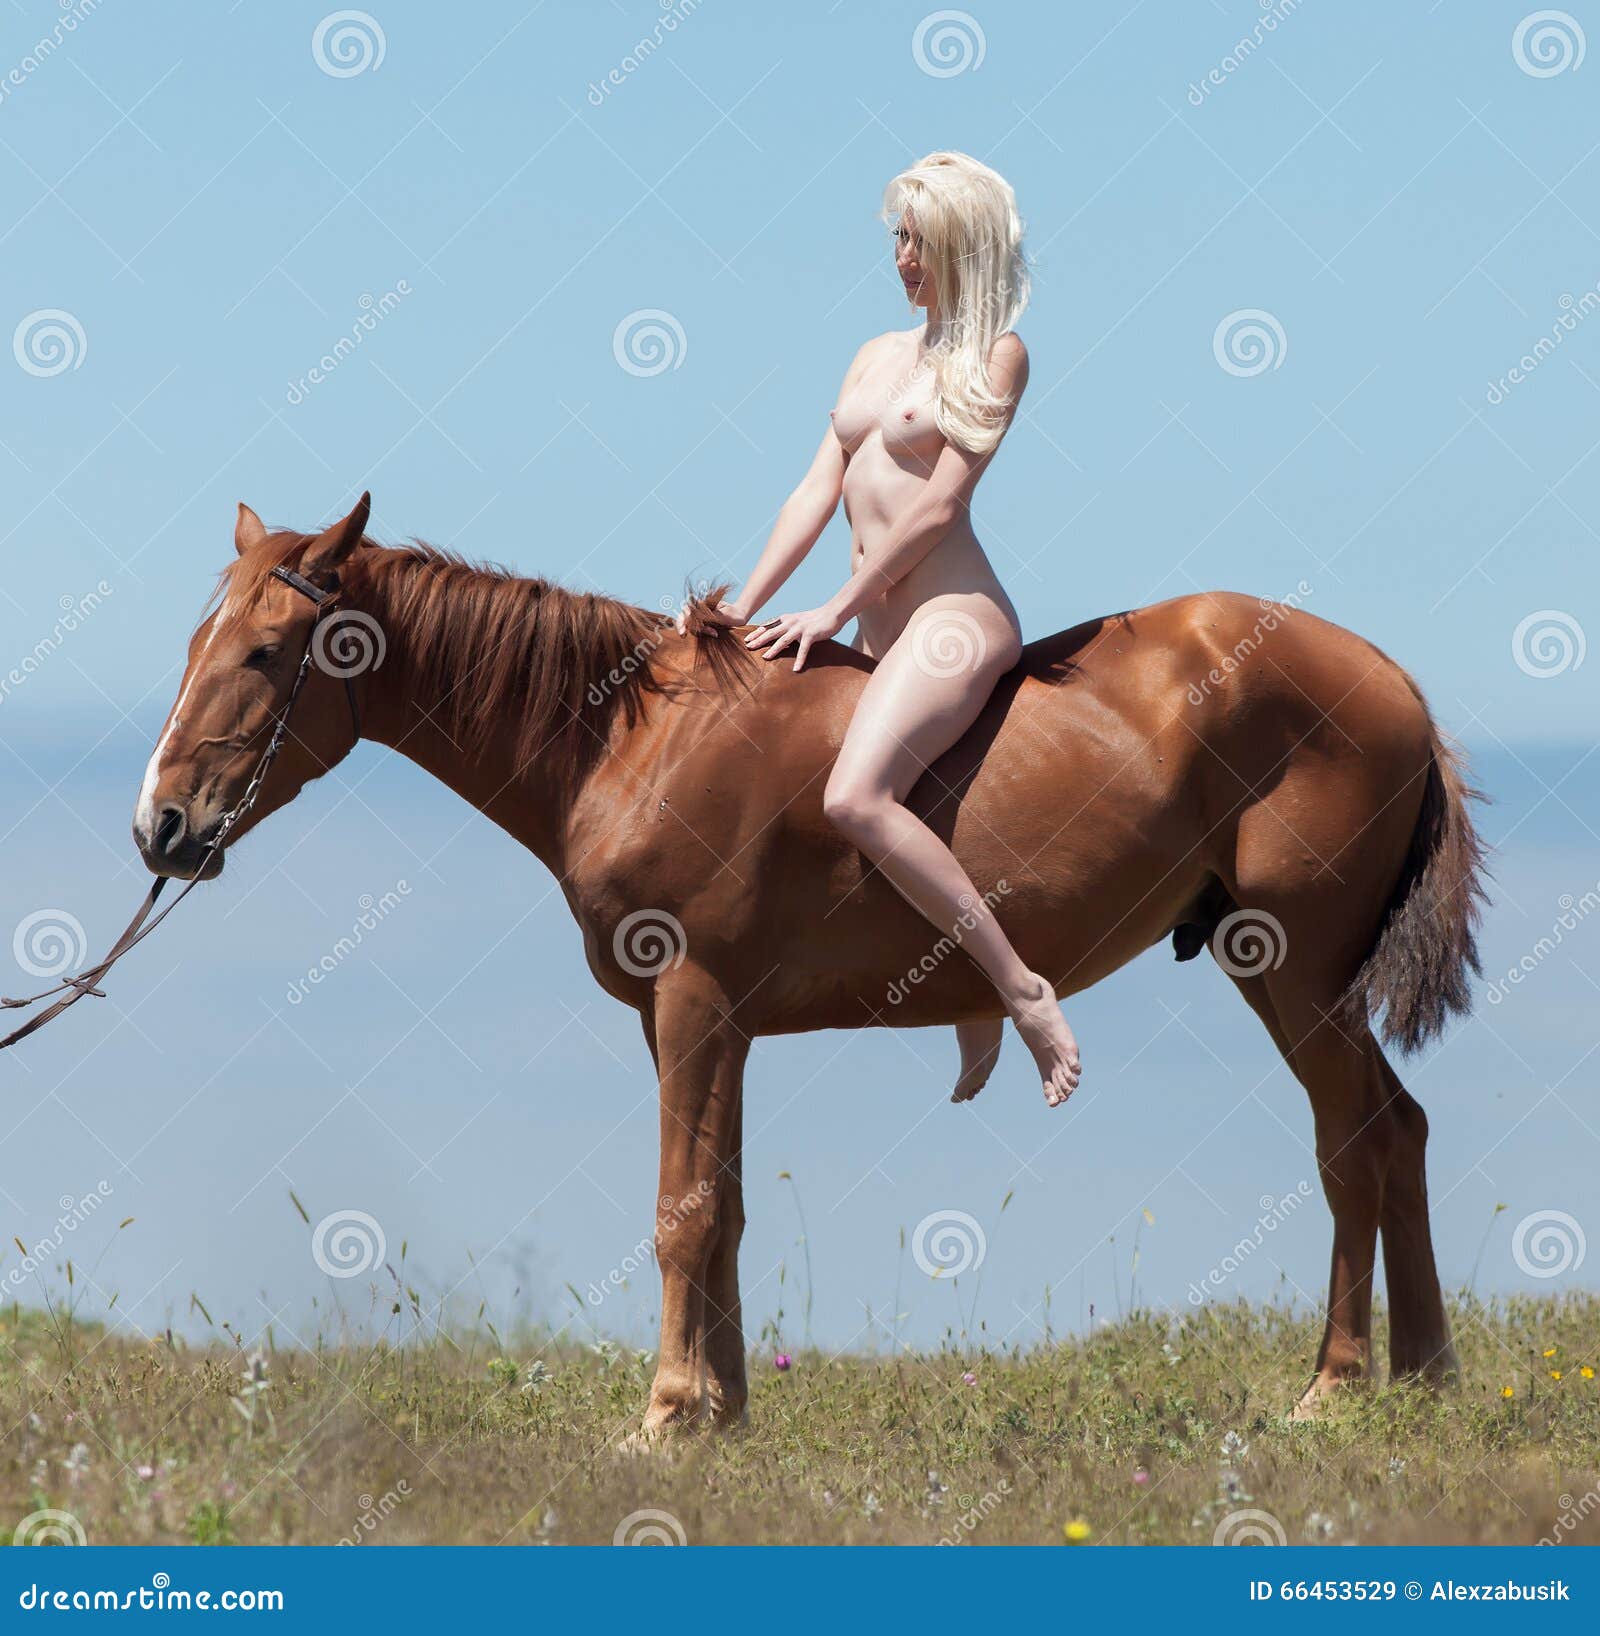 Naked horse riding